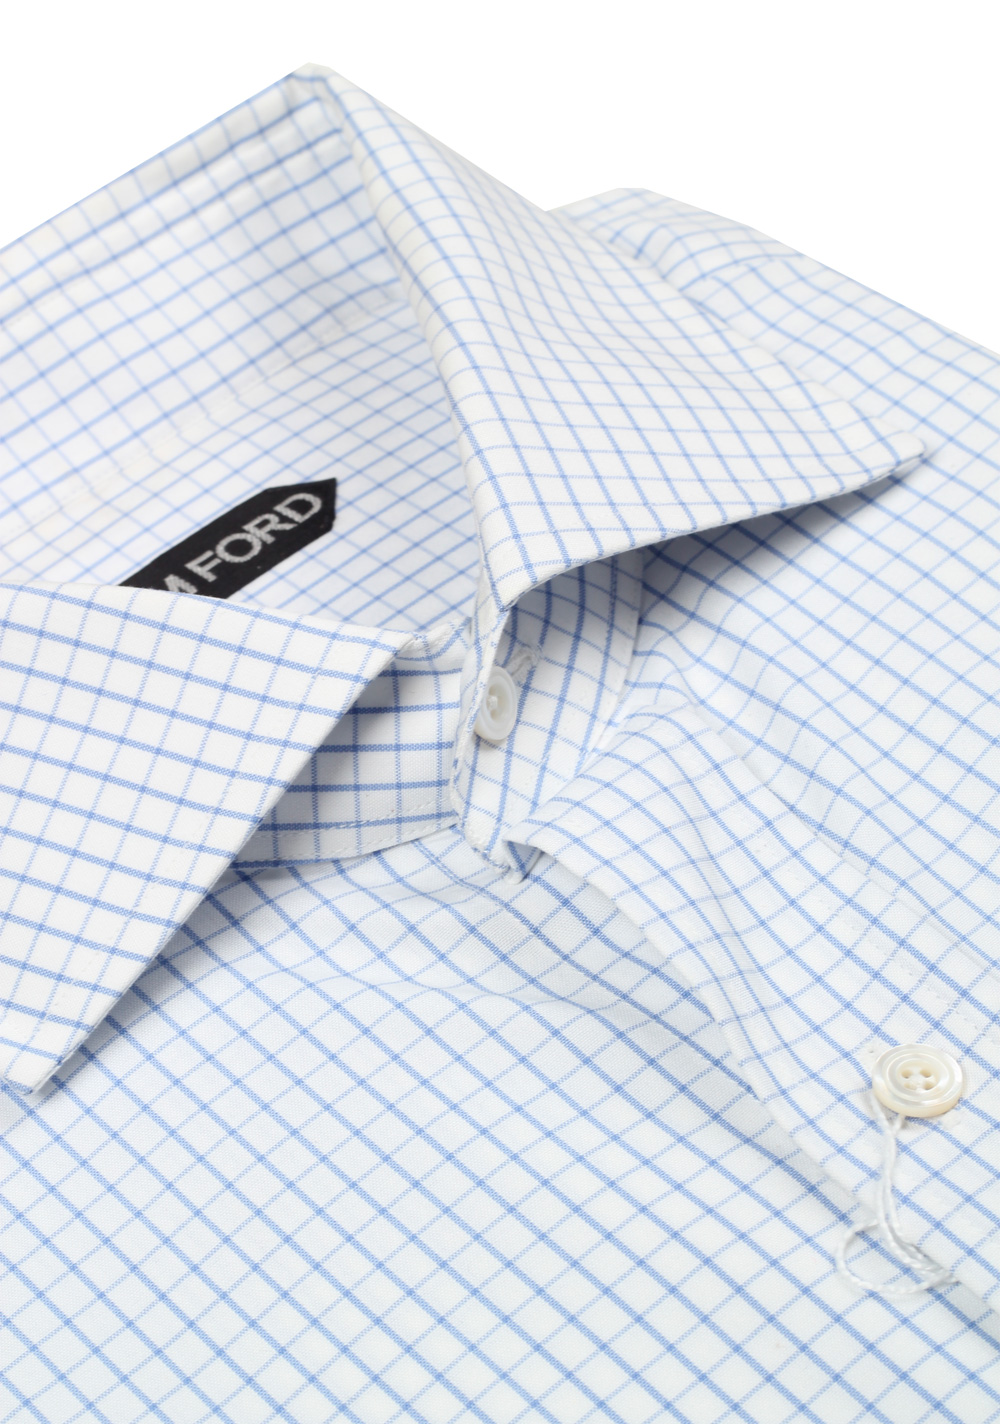 TOM FORD Checked White Blue Shirt Size 43 / 17 U.S. | Costume Limité